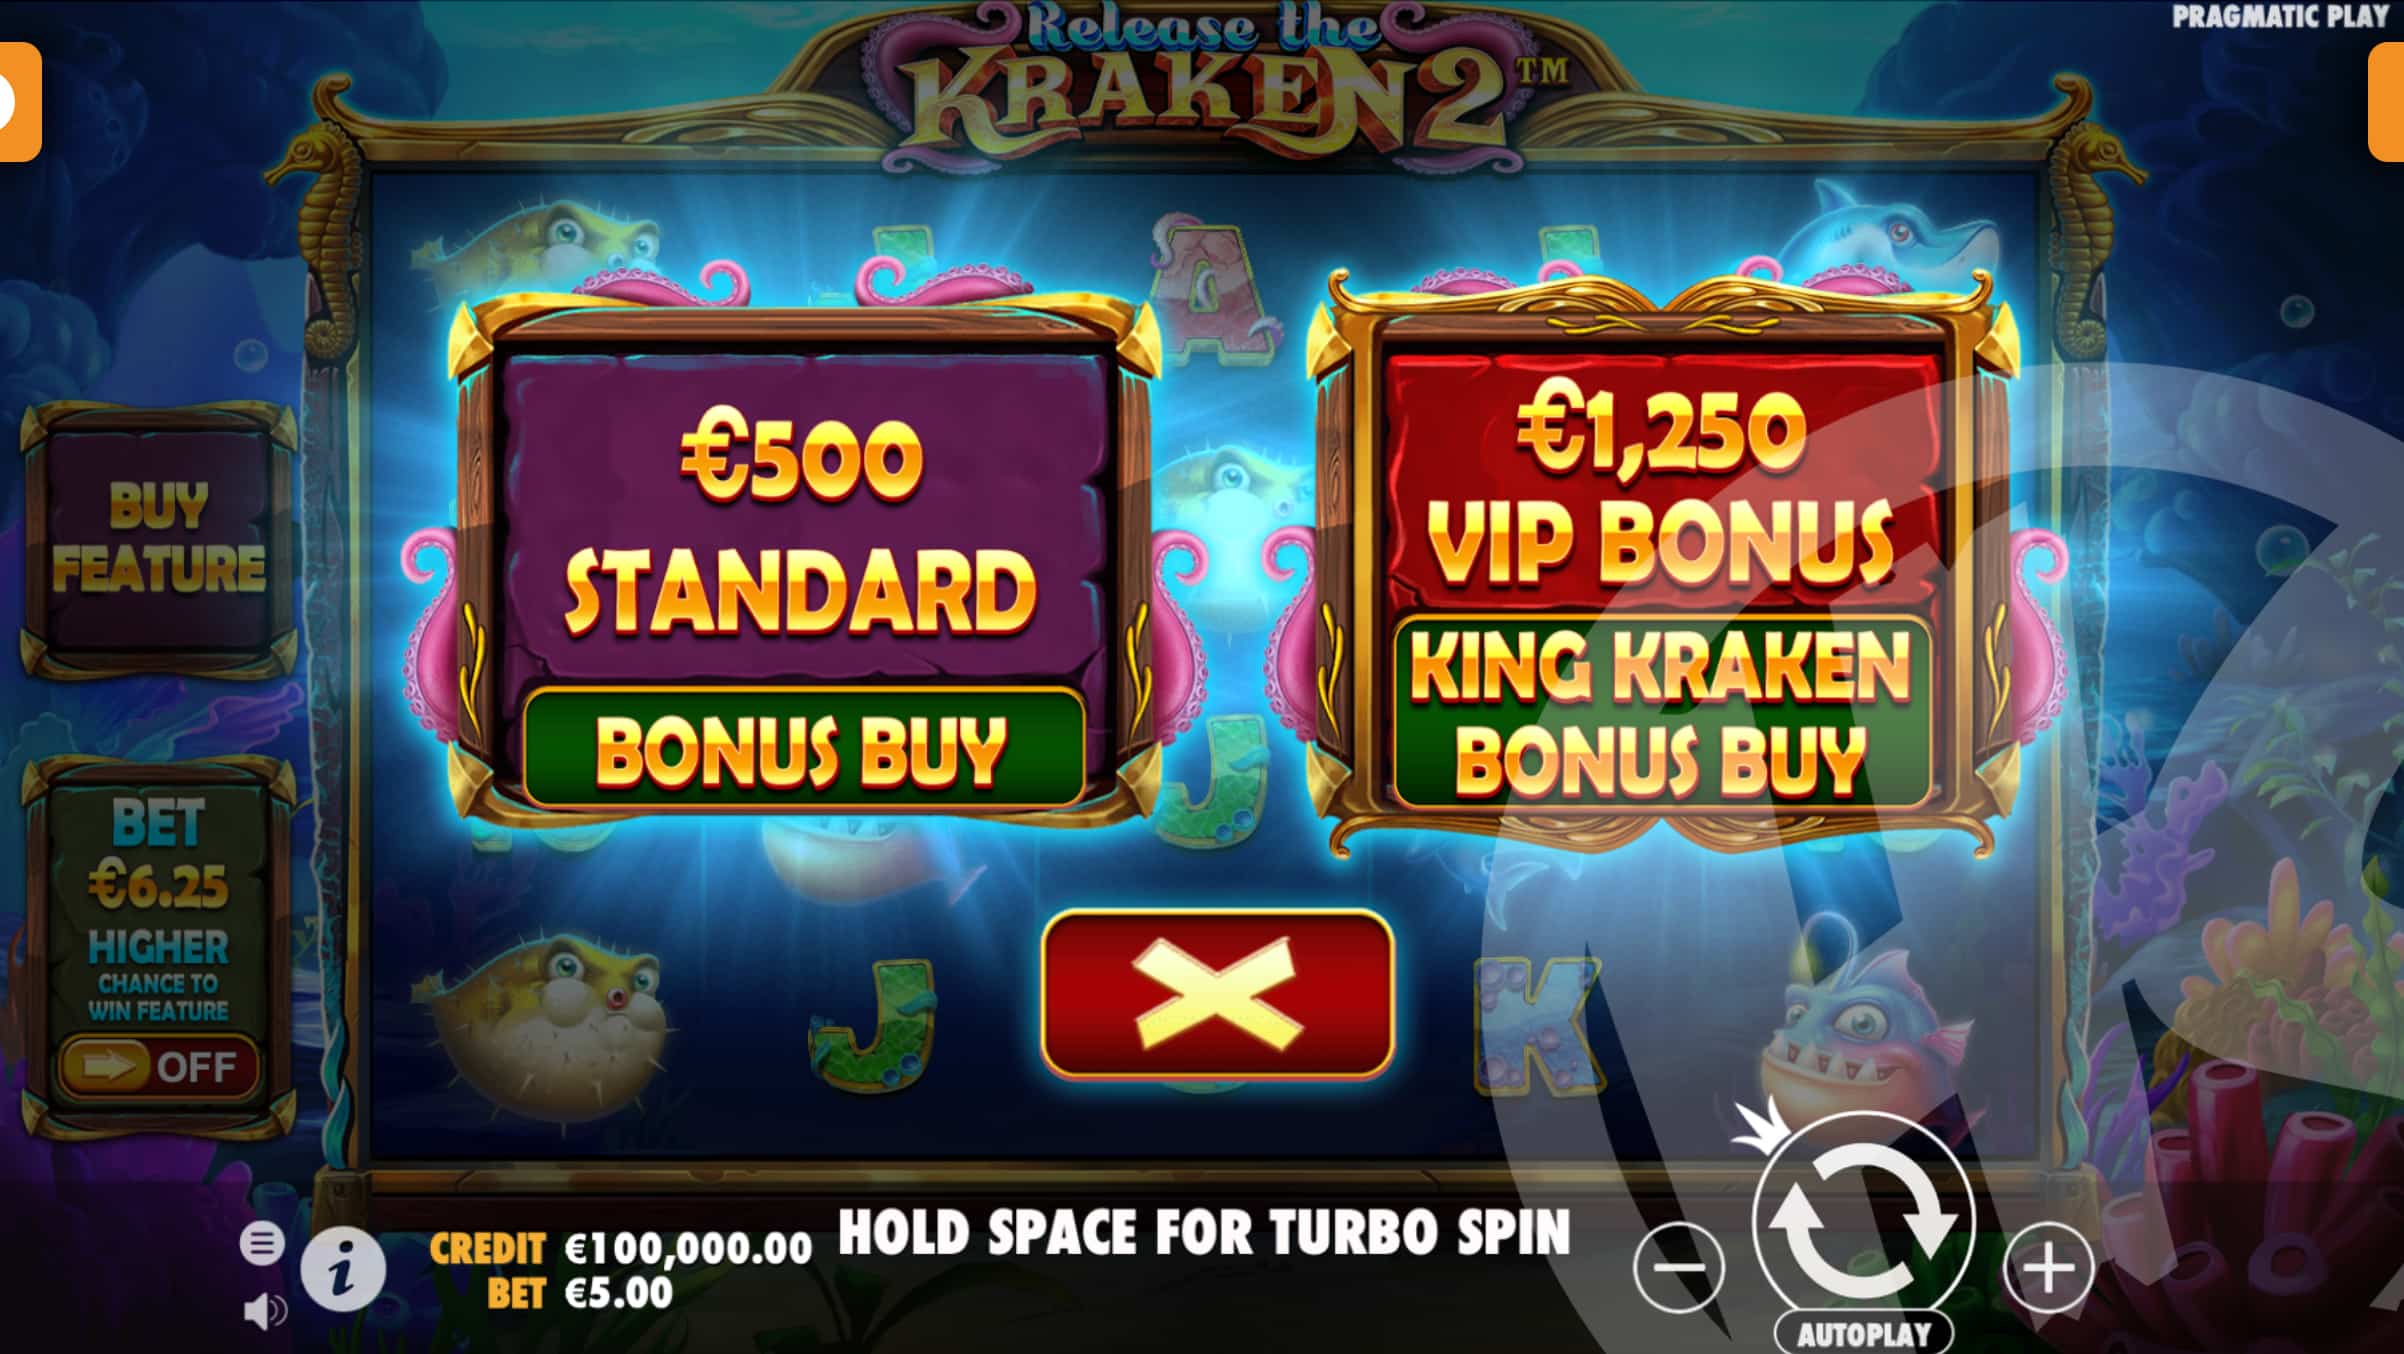 Release the Kraken 2 Buy Free Spins Options